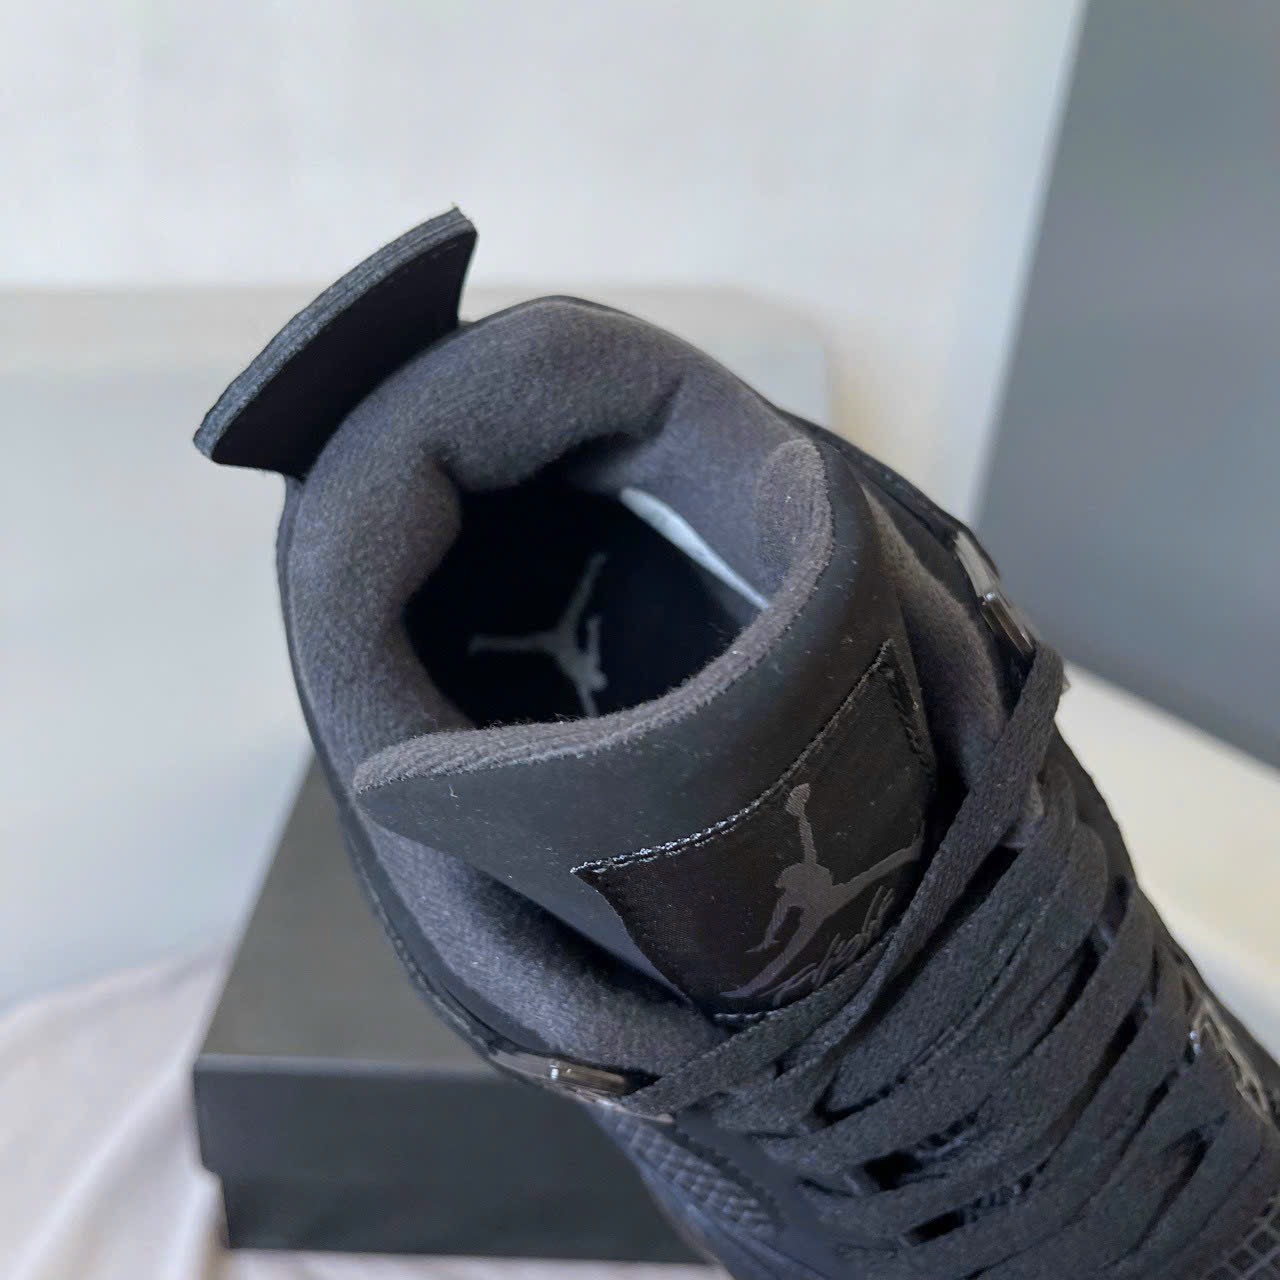 Giày Nike Air Jordan 4 Retro Black Cat Best Quality